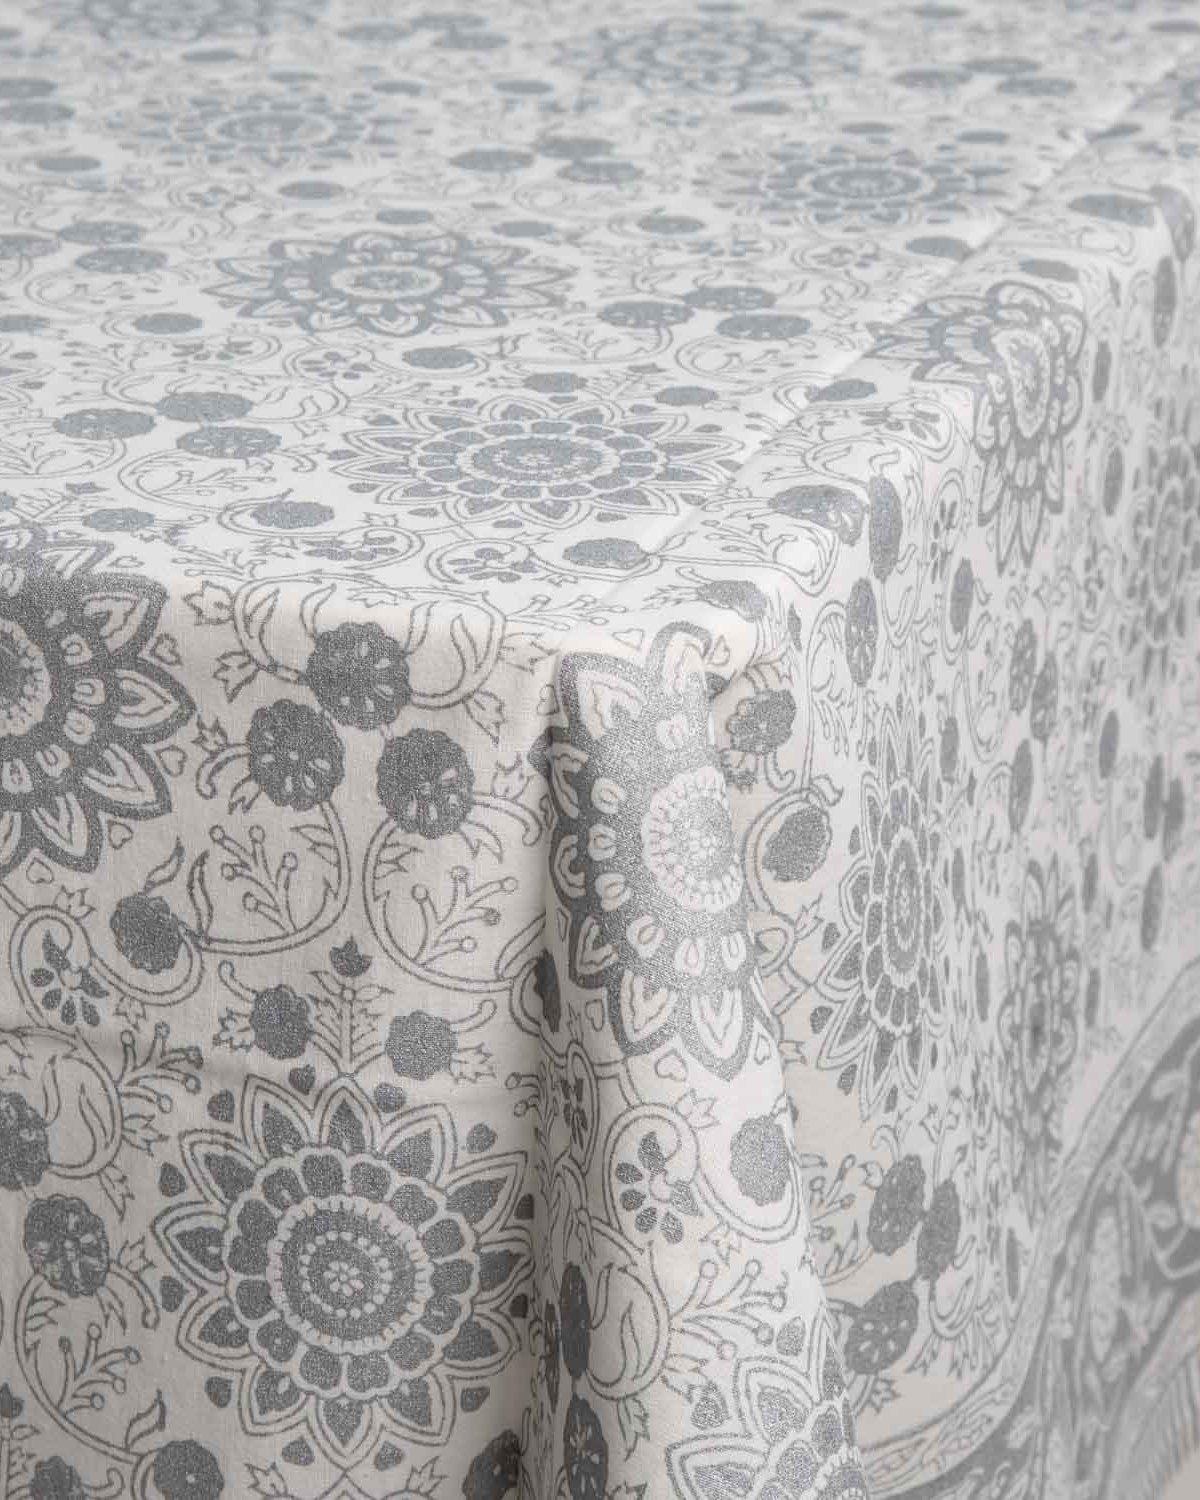 Silver Blockprint Tablecloth -  Silver